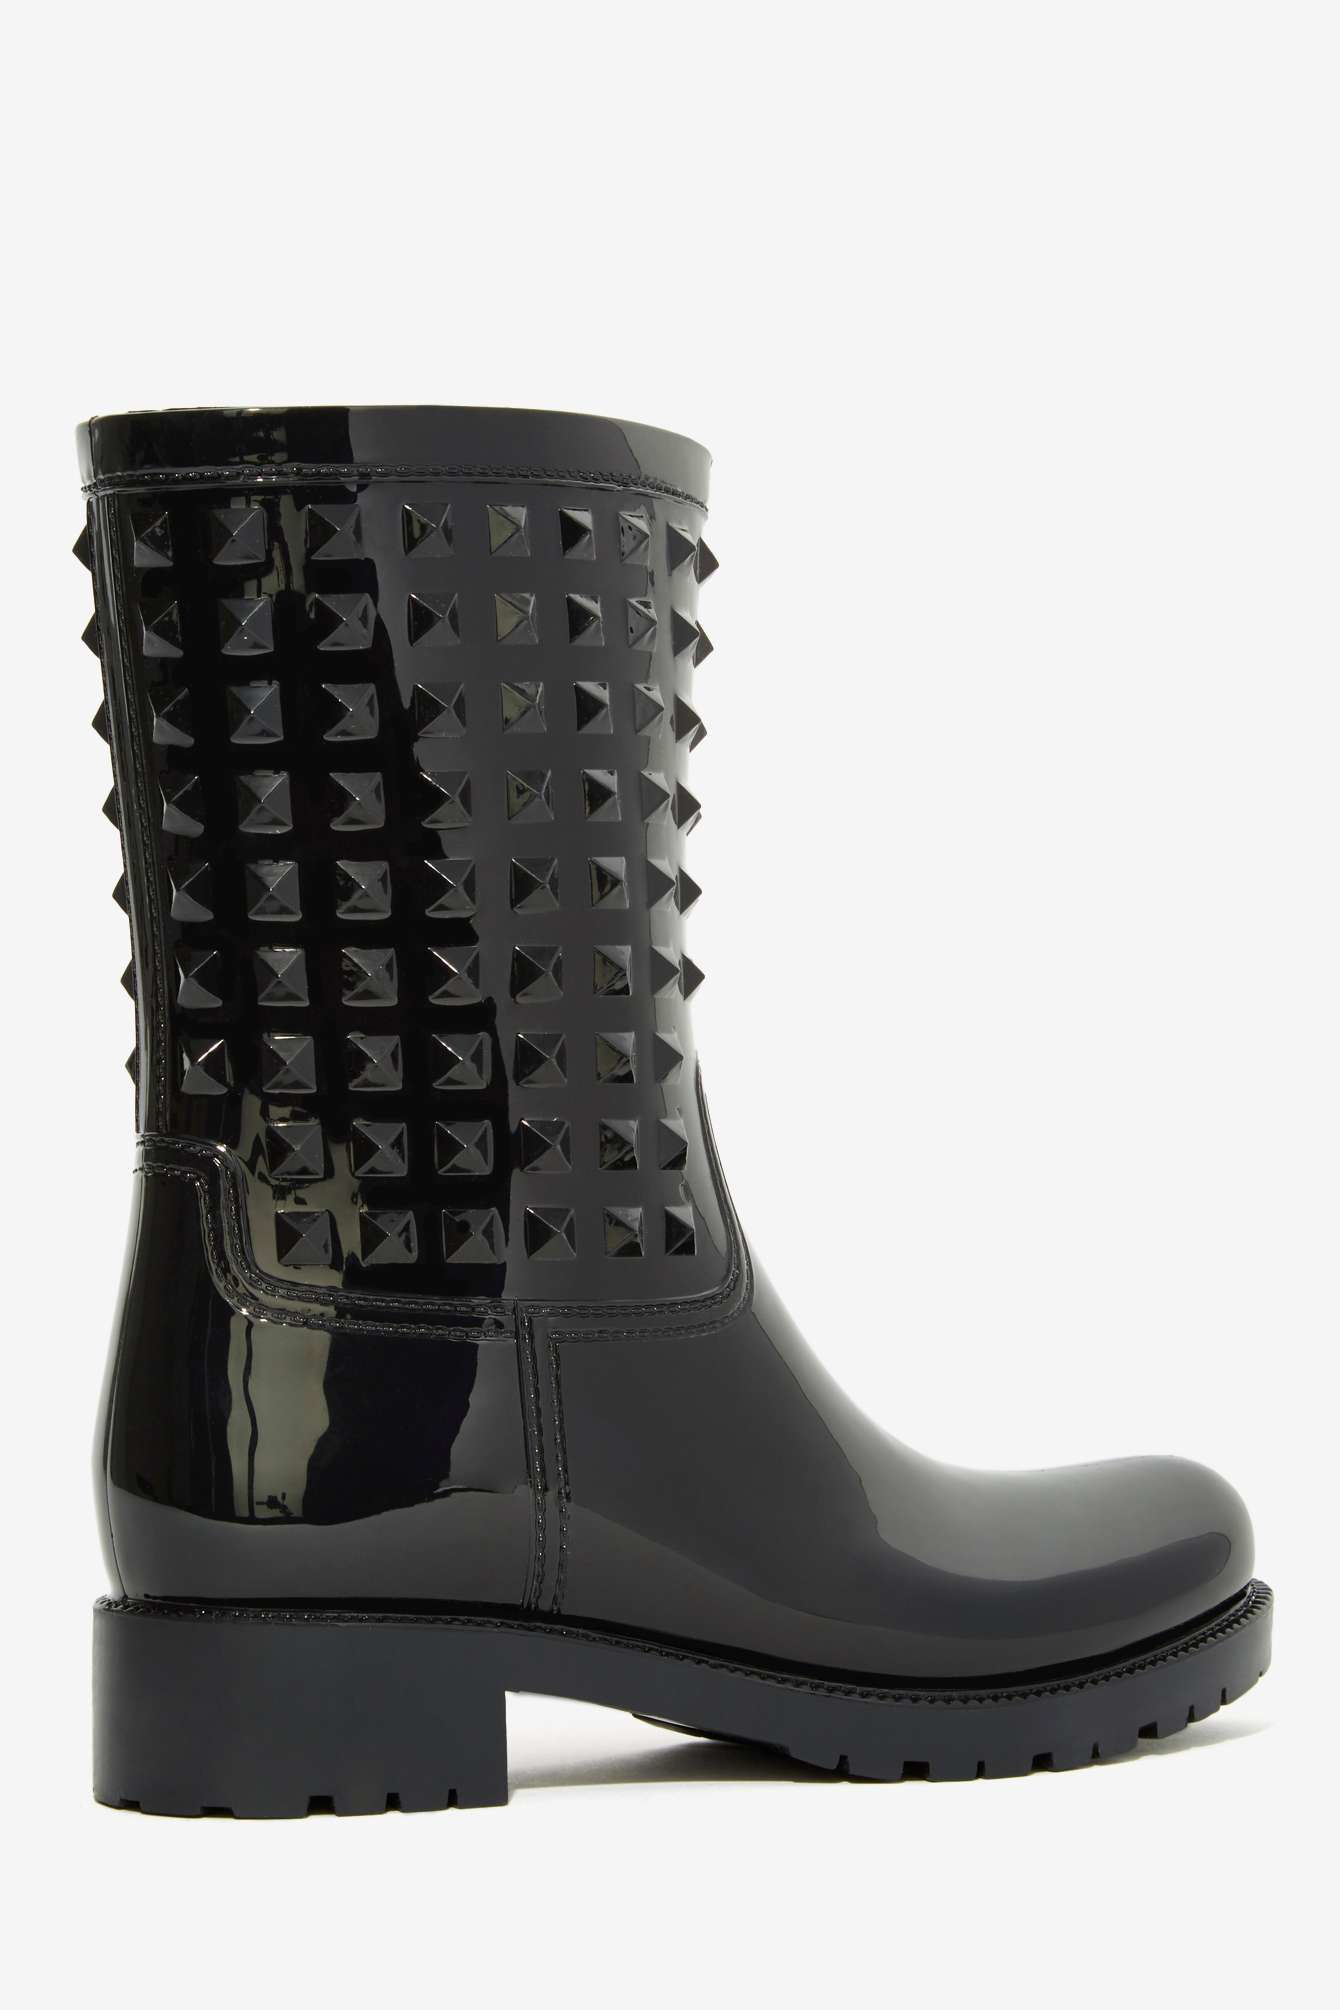 Lyst - Nasty Gal Camden Studded Rain Boot - Black in Black